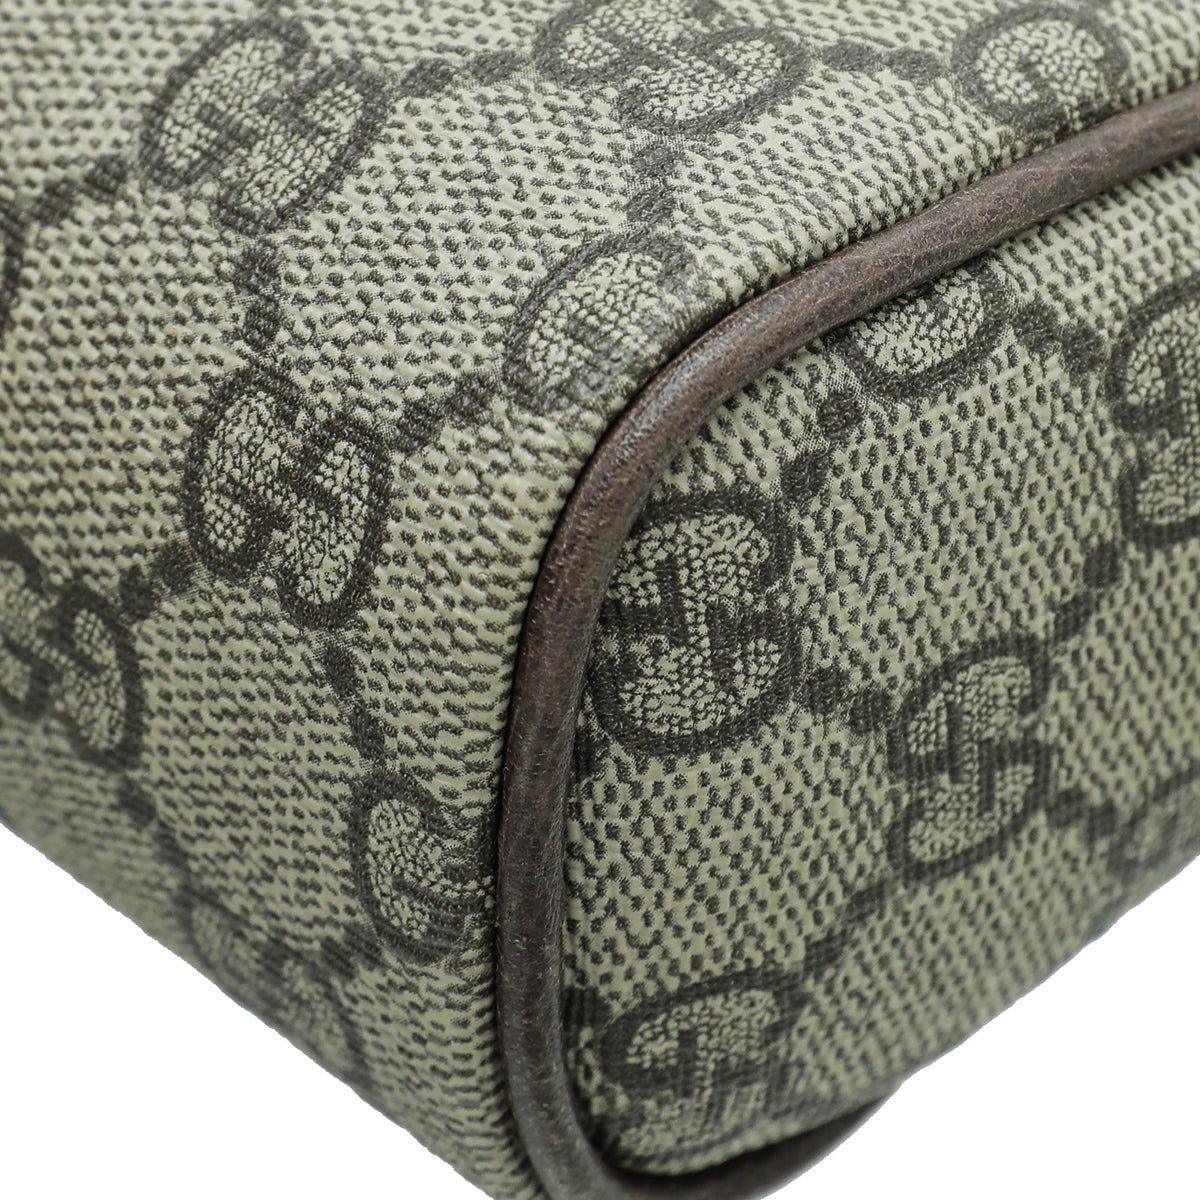 Gucci Bicolor GG Supreme Web Small Ophidia Belt Bag